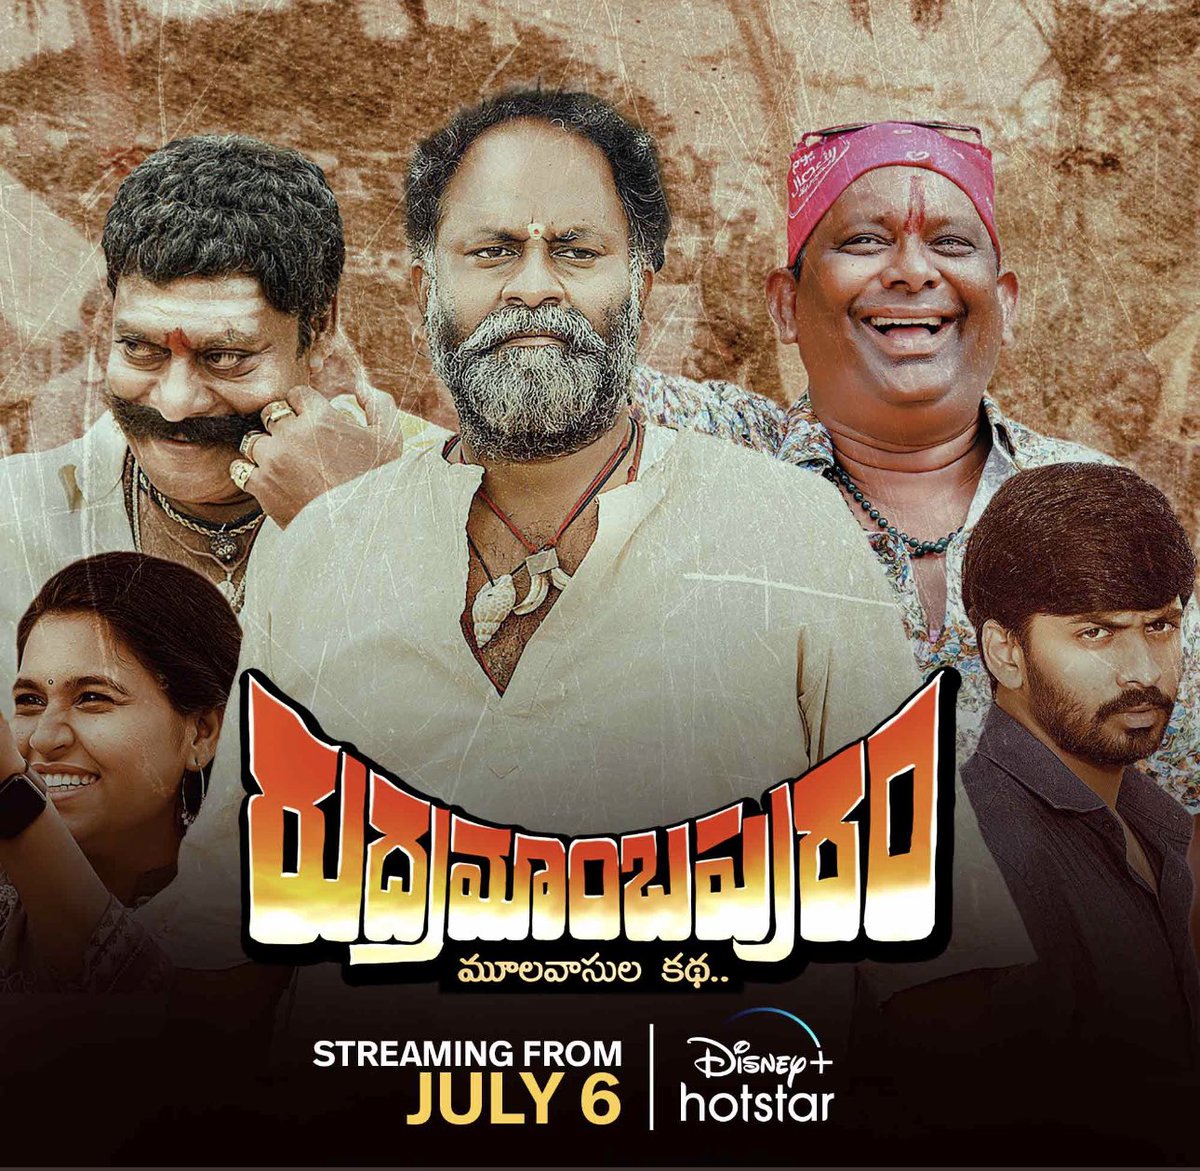 Anaganaga oka oru... Oori peru Rudramambapuram! 🛖🌊 Watch the story of #Rudramambapuram, streaming from July 6th only on #DisneyPlusHotstar. @MaheshB36247102 @rajasekharaa @thearjunrajesh @bnreddystar @music_vengi @rahulsipliganj @Jojoomaster10